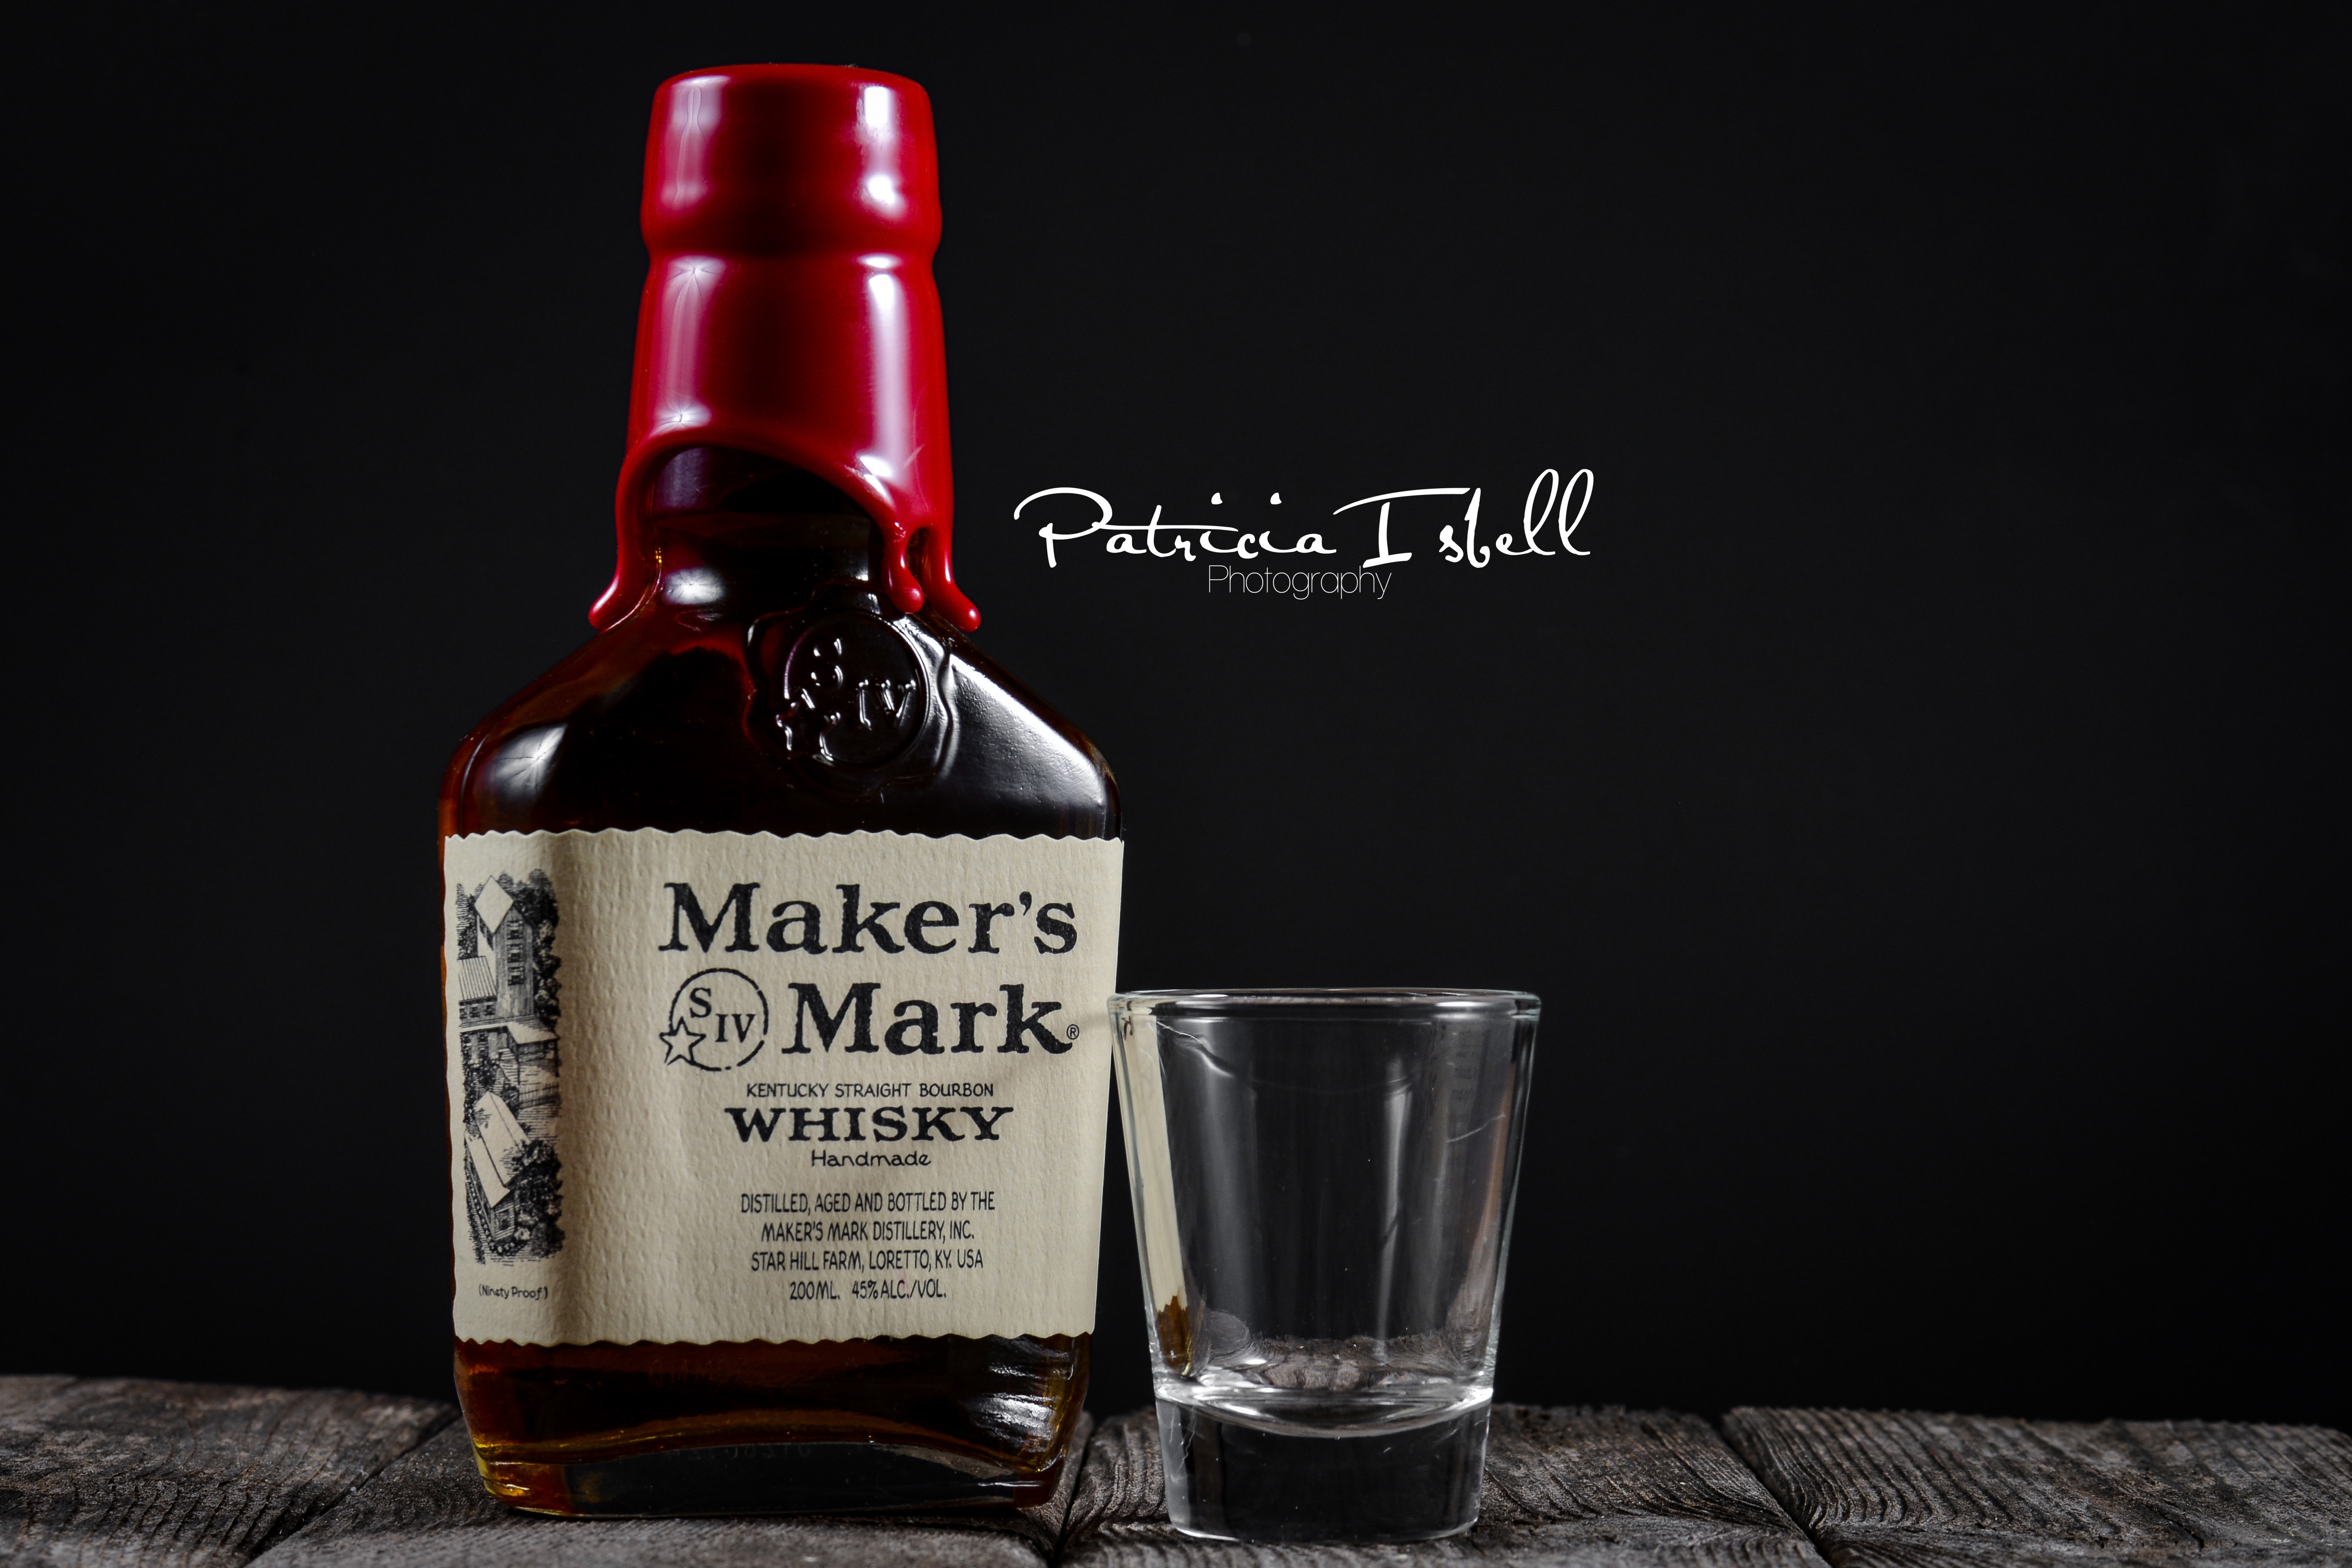 Makers Mark виски. Troublemaker виски. Makers Mark виски купить. Трейл мейкерс